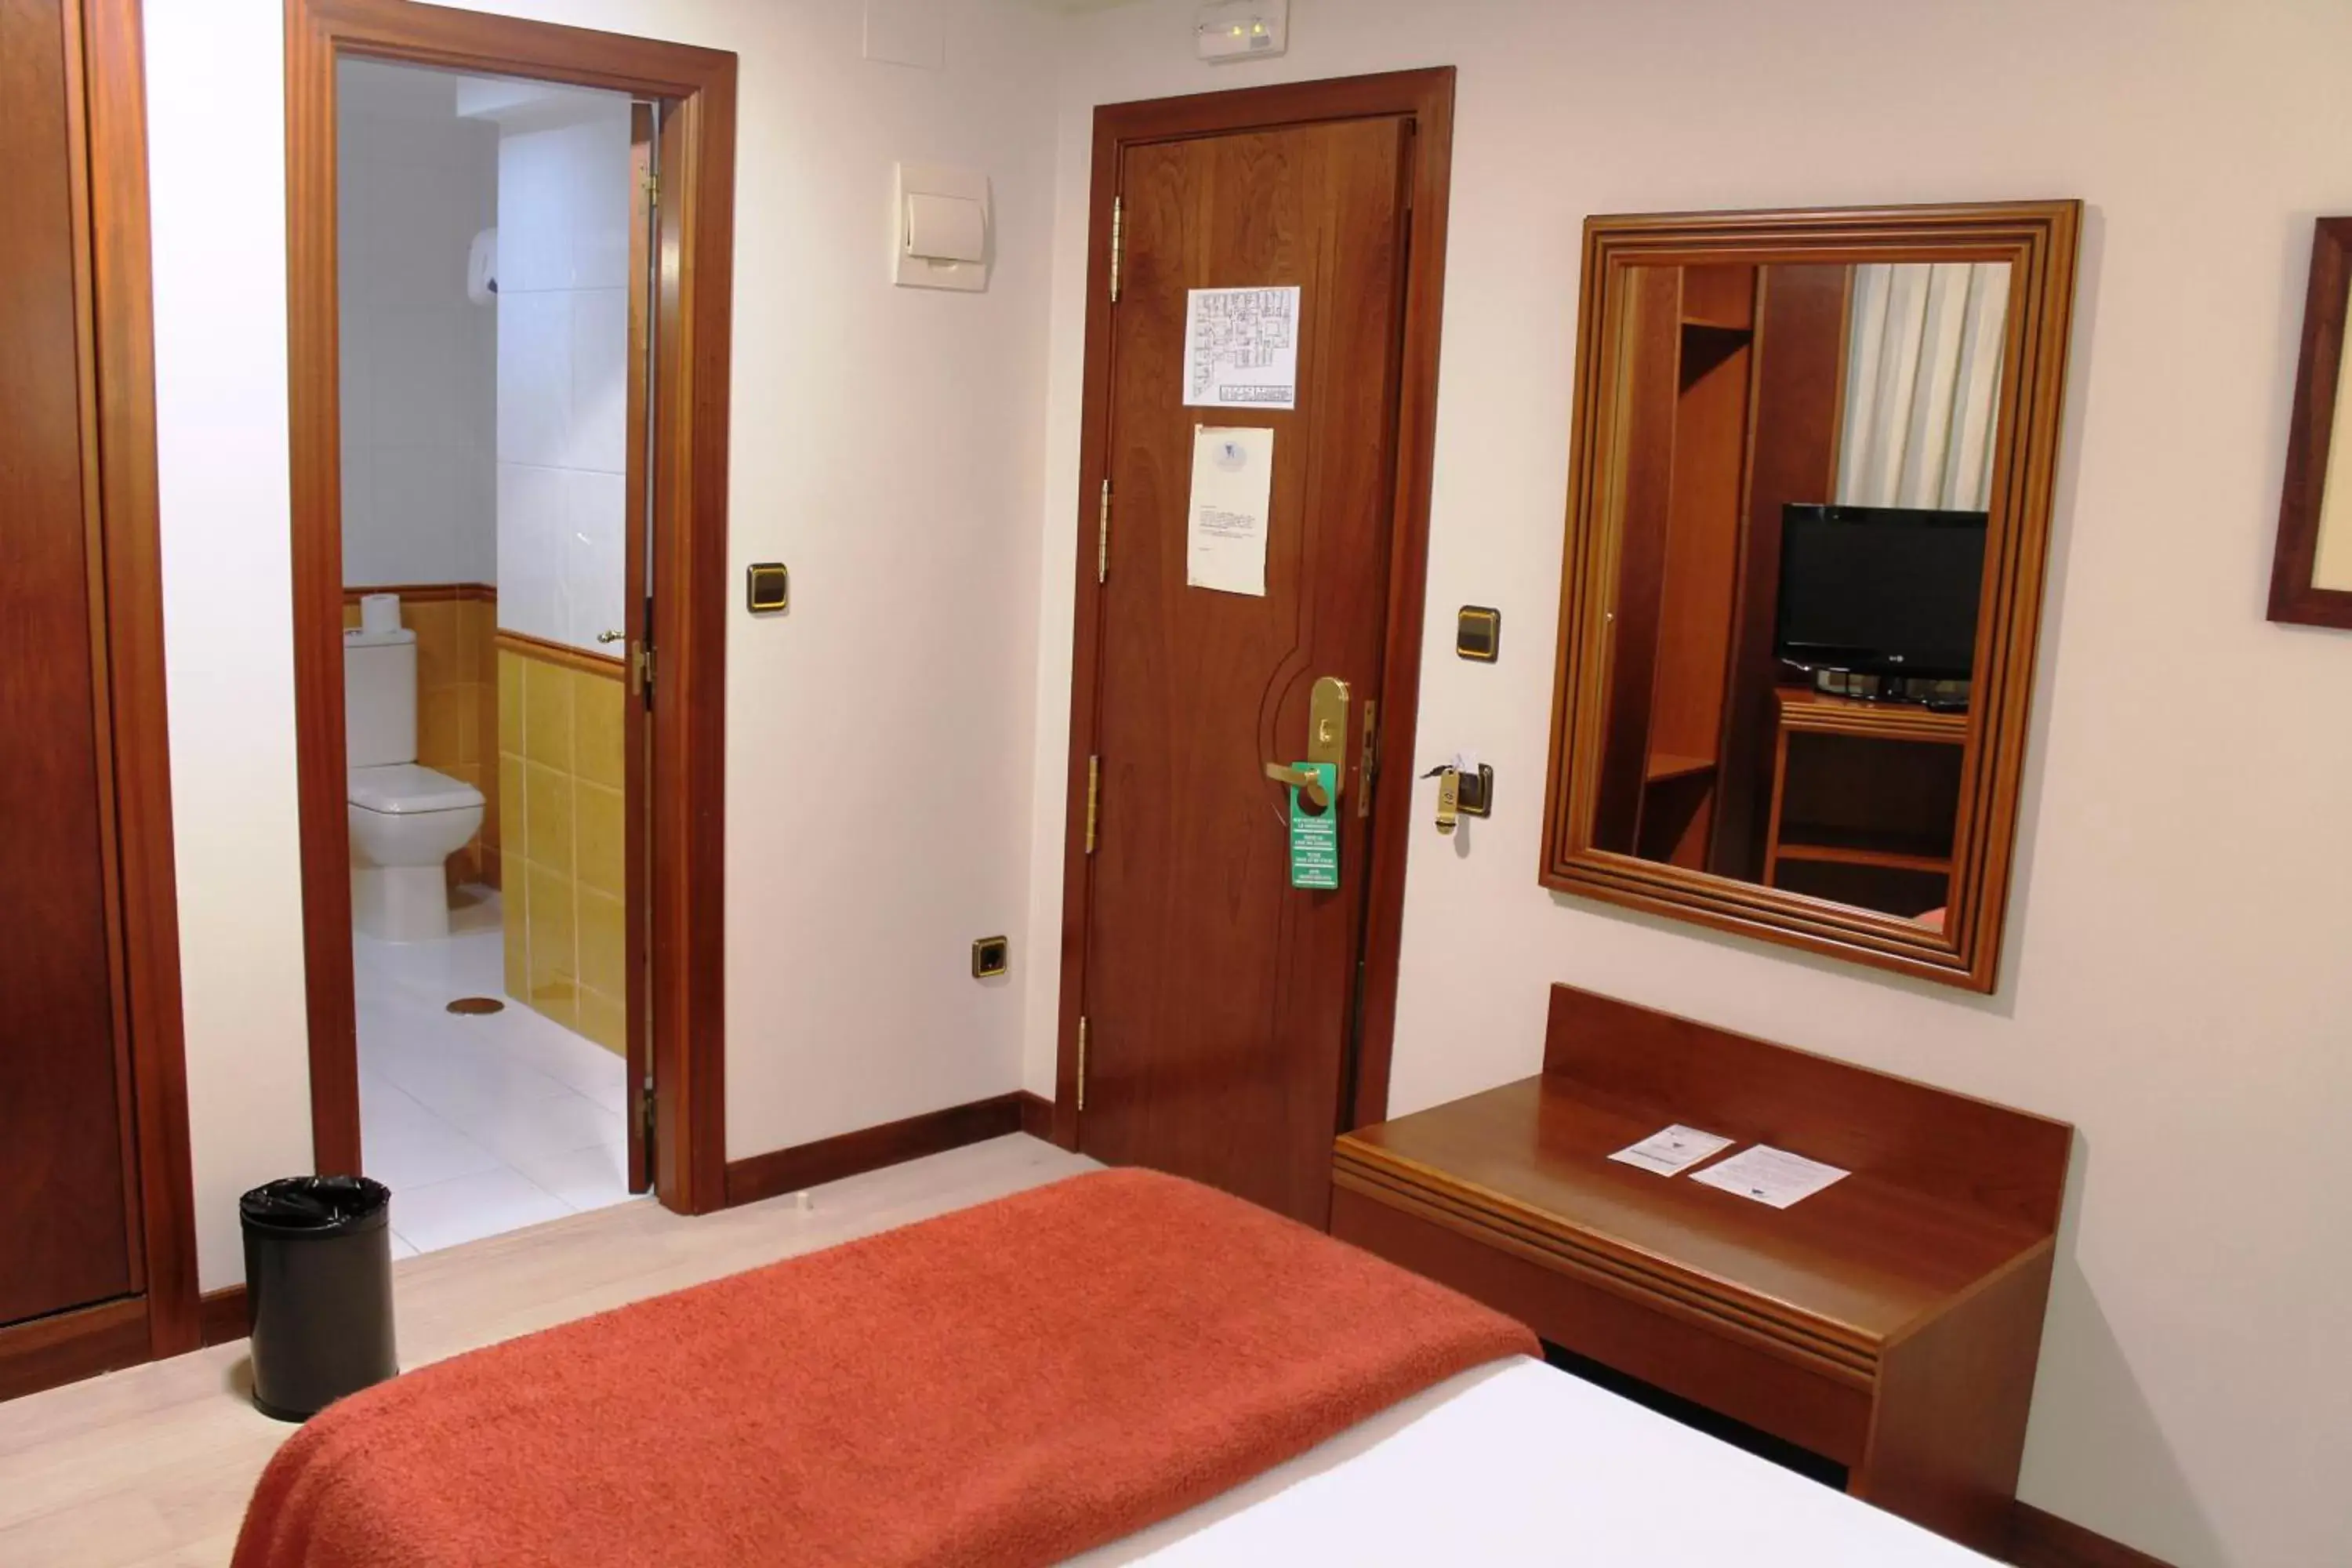 Bedroom, Room Photo in Hotel Villa de Marin